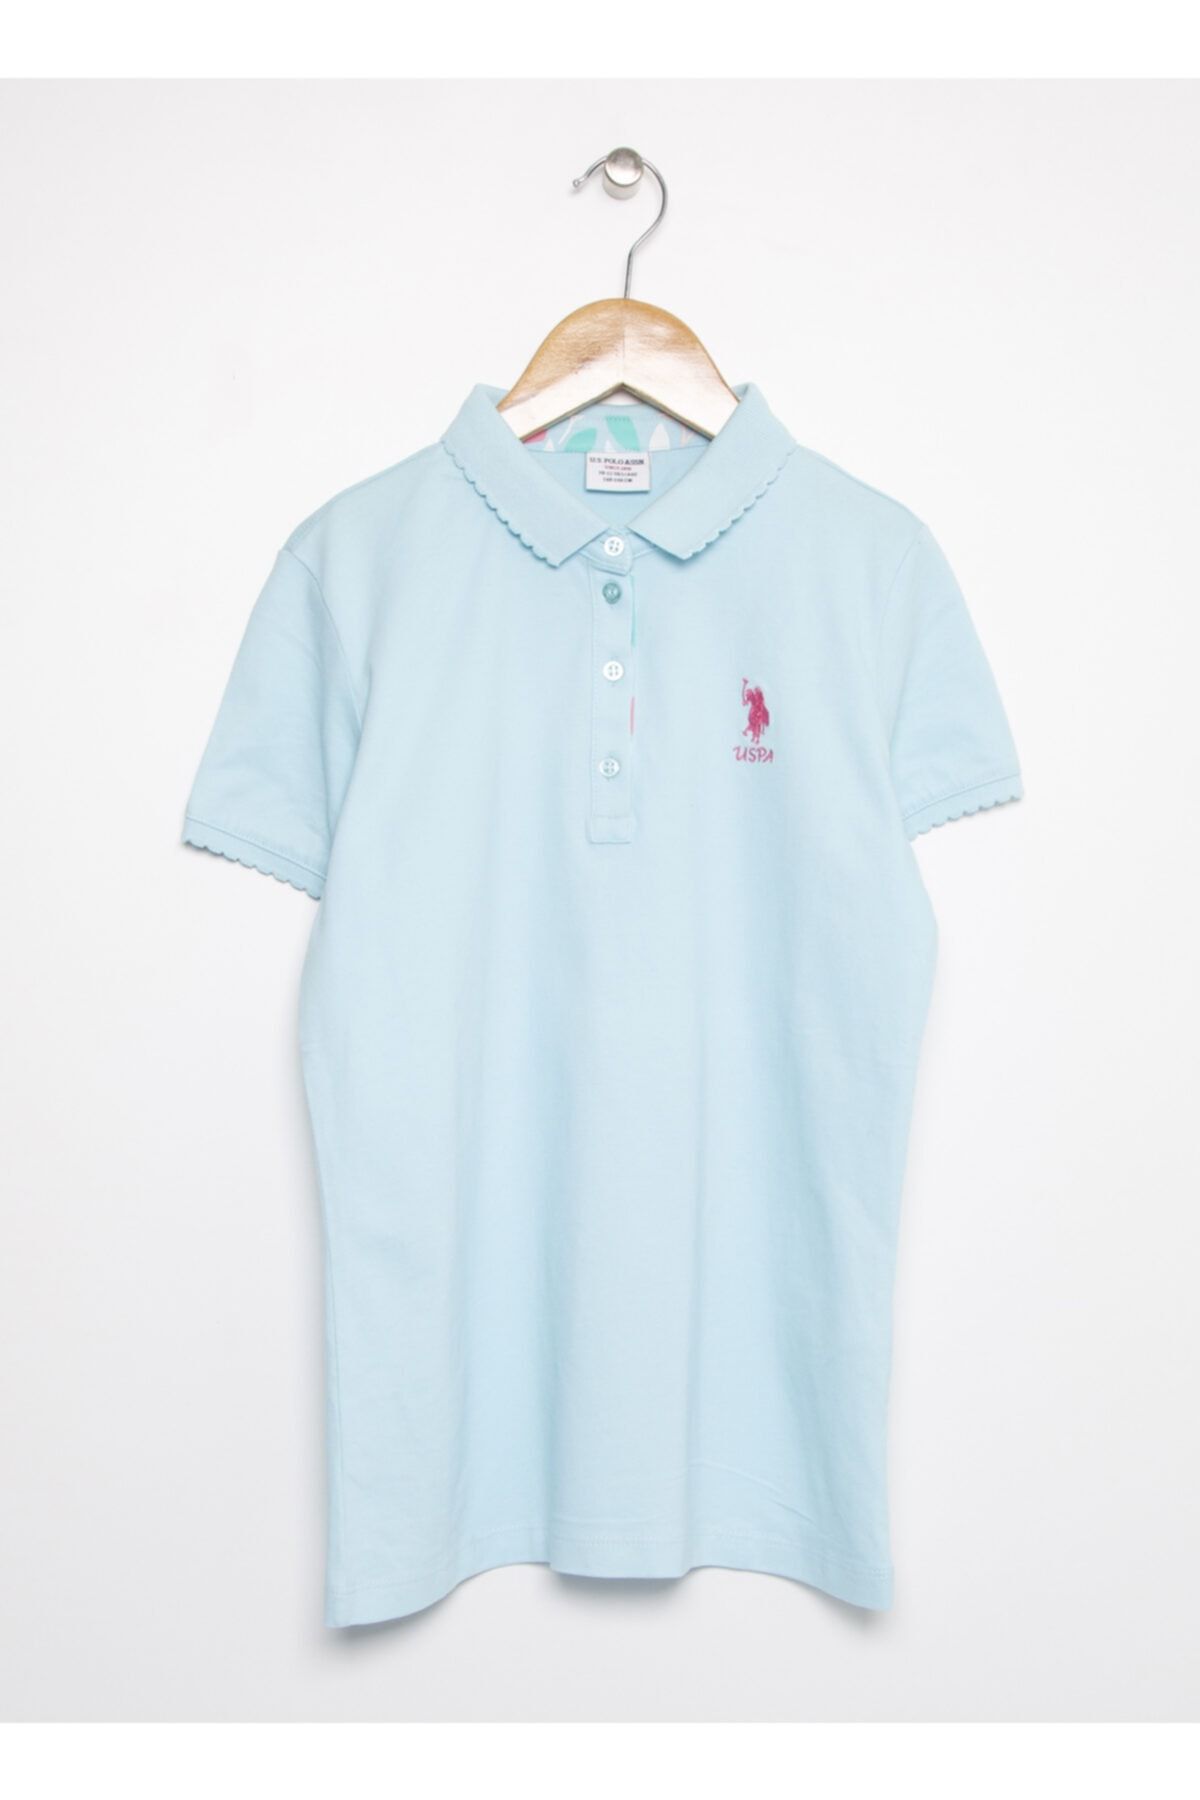 U.S. Polo Assn. Kız Çocuk Mavi T-Shirt 5002552341